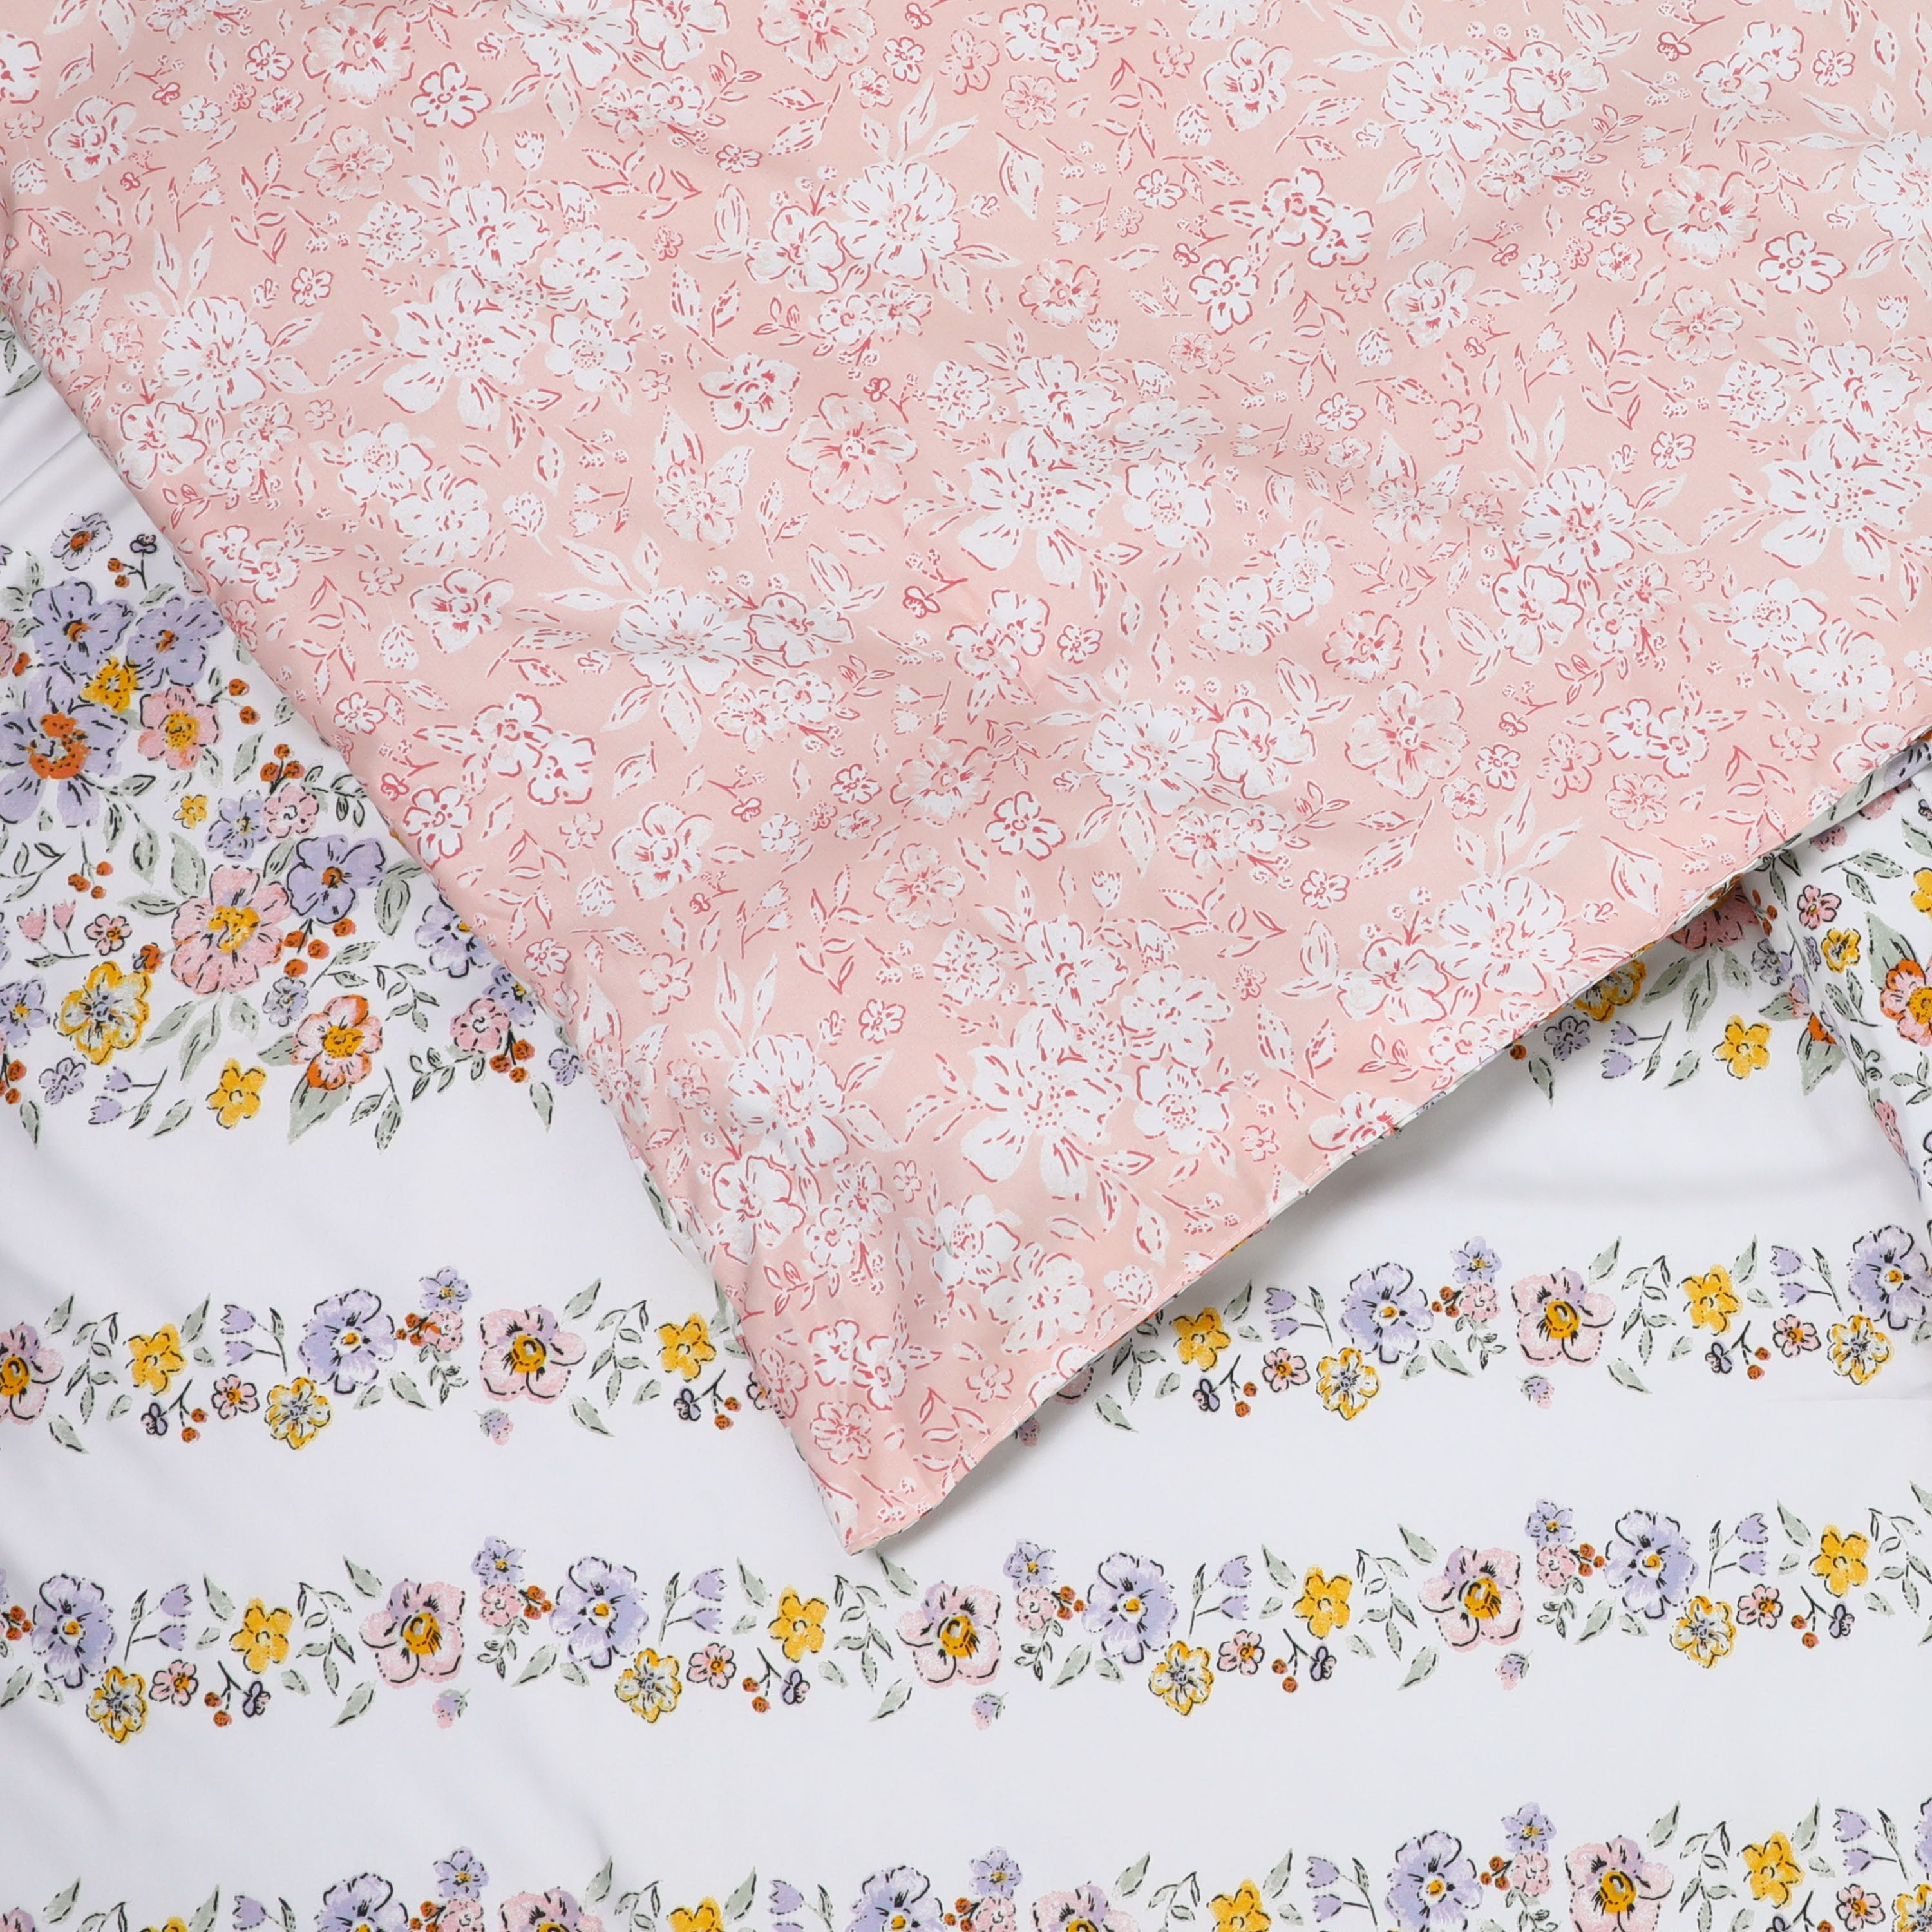 3 Piece Microfiber Comforter Set -Pink Floral